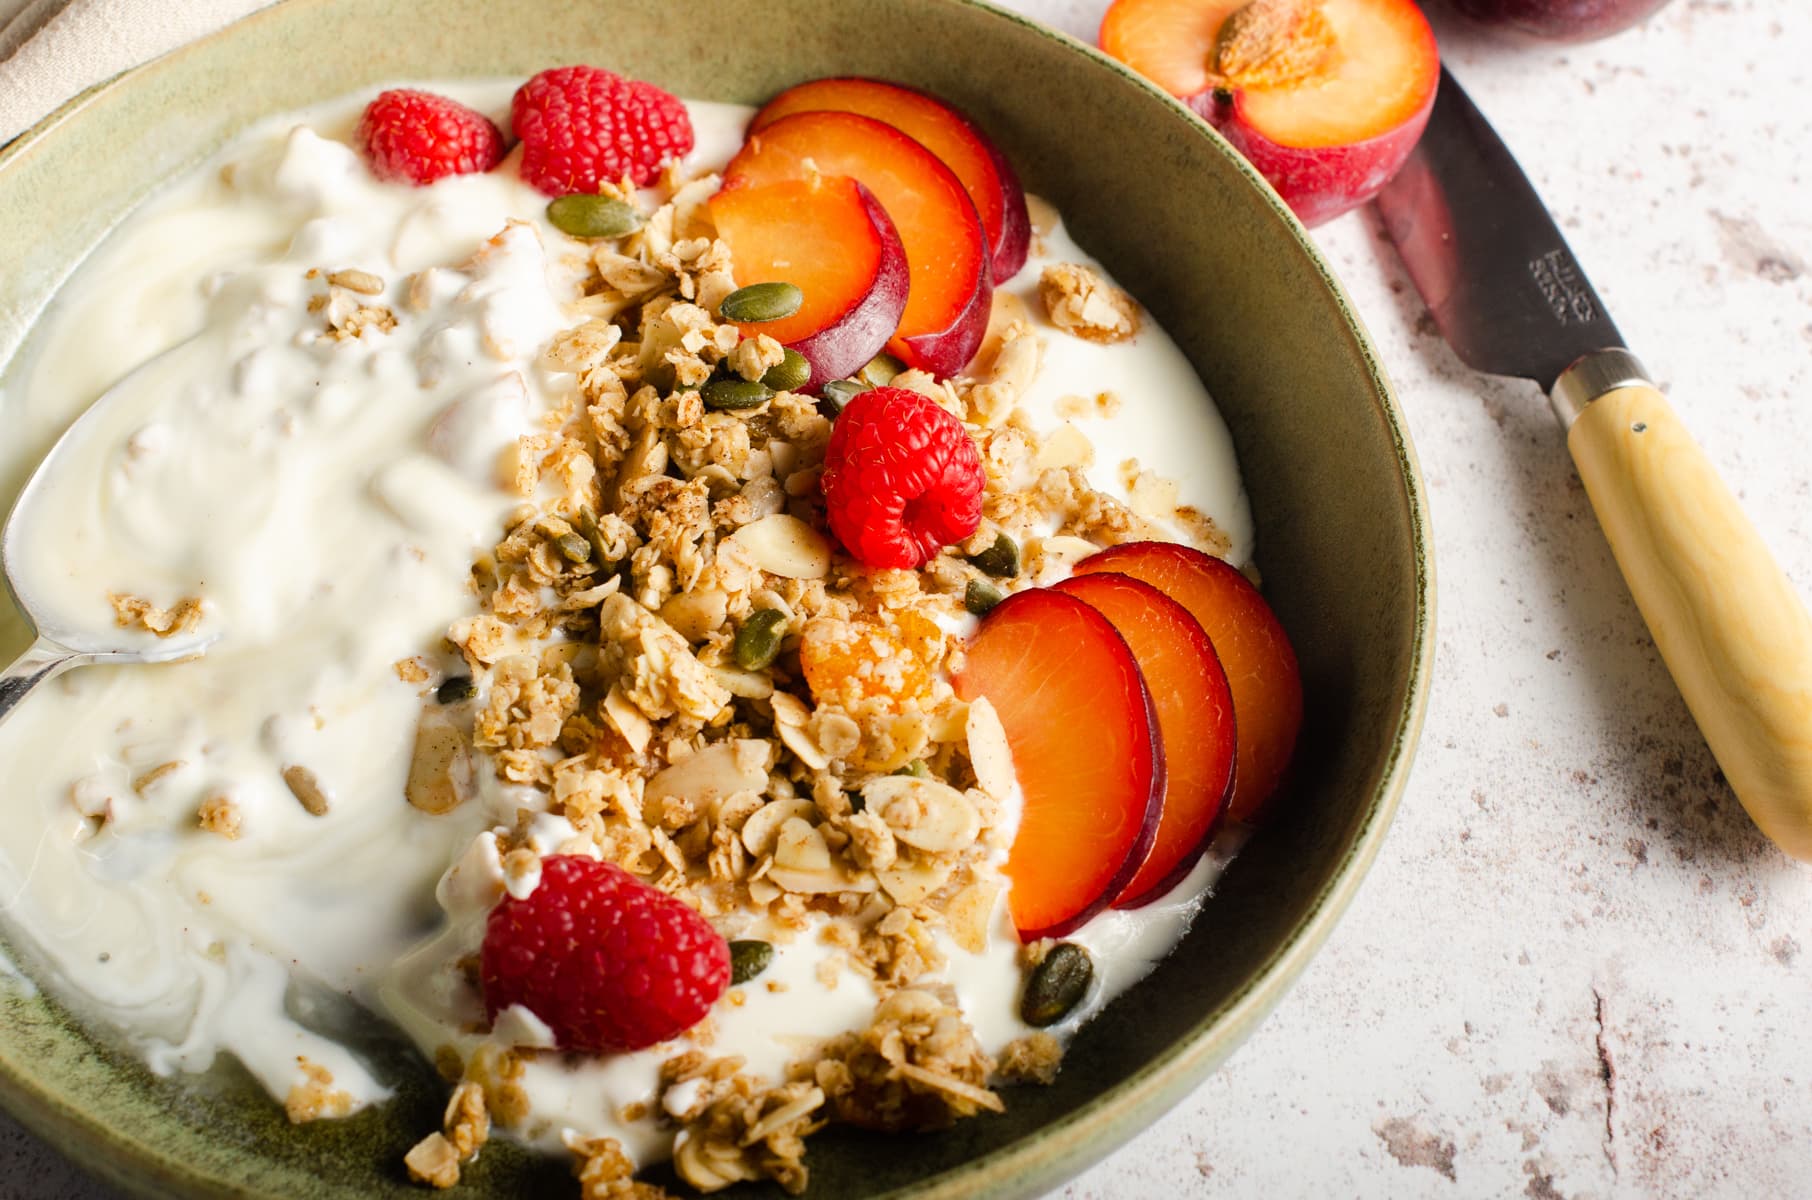 A breakfast setting of granola, yogurt and fresh fruit.